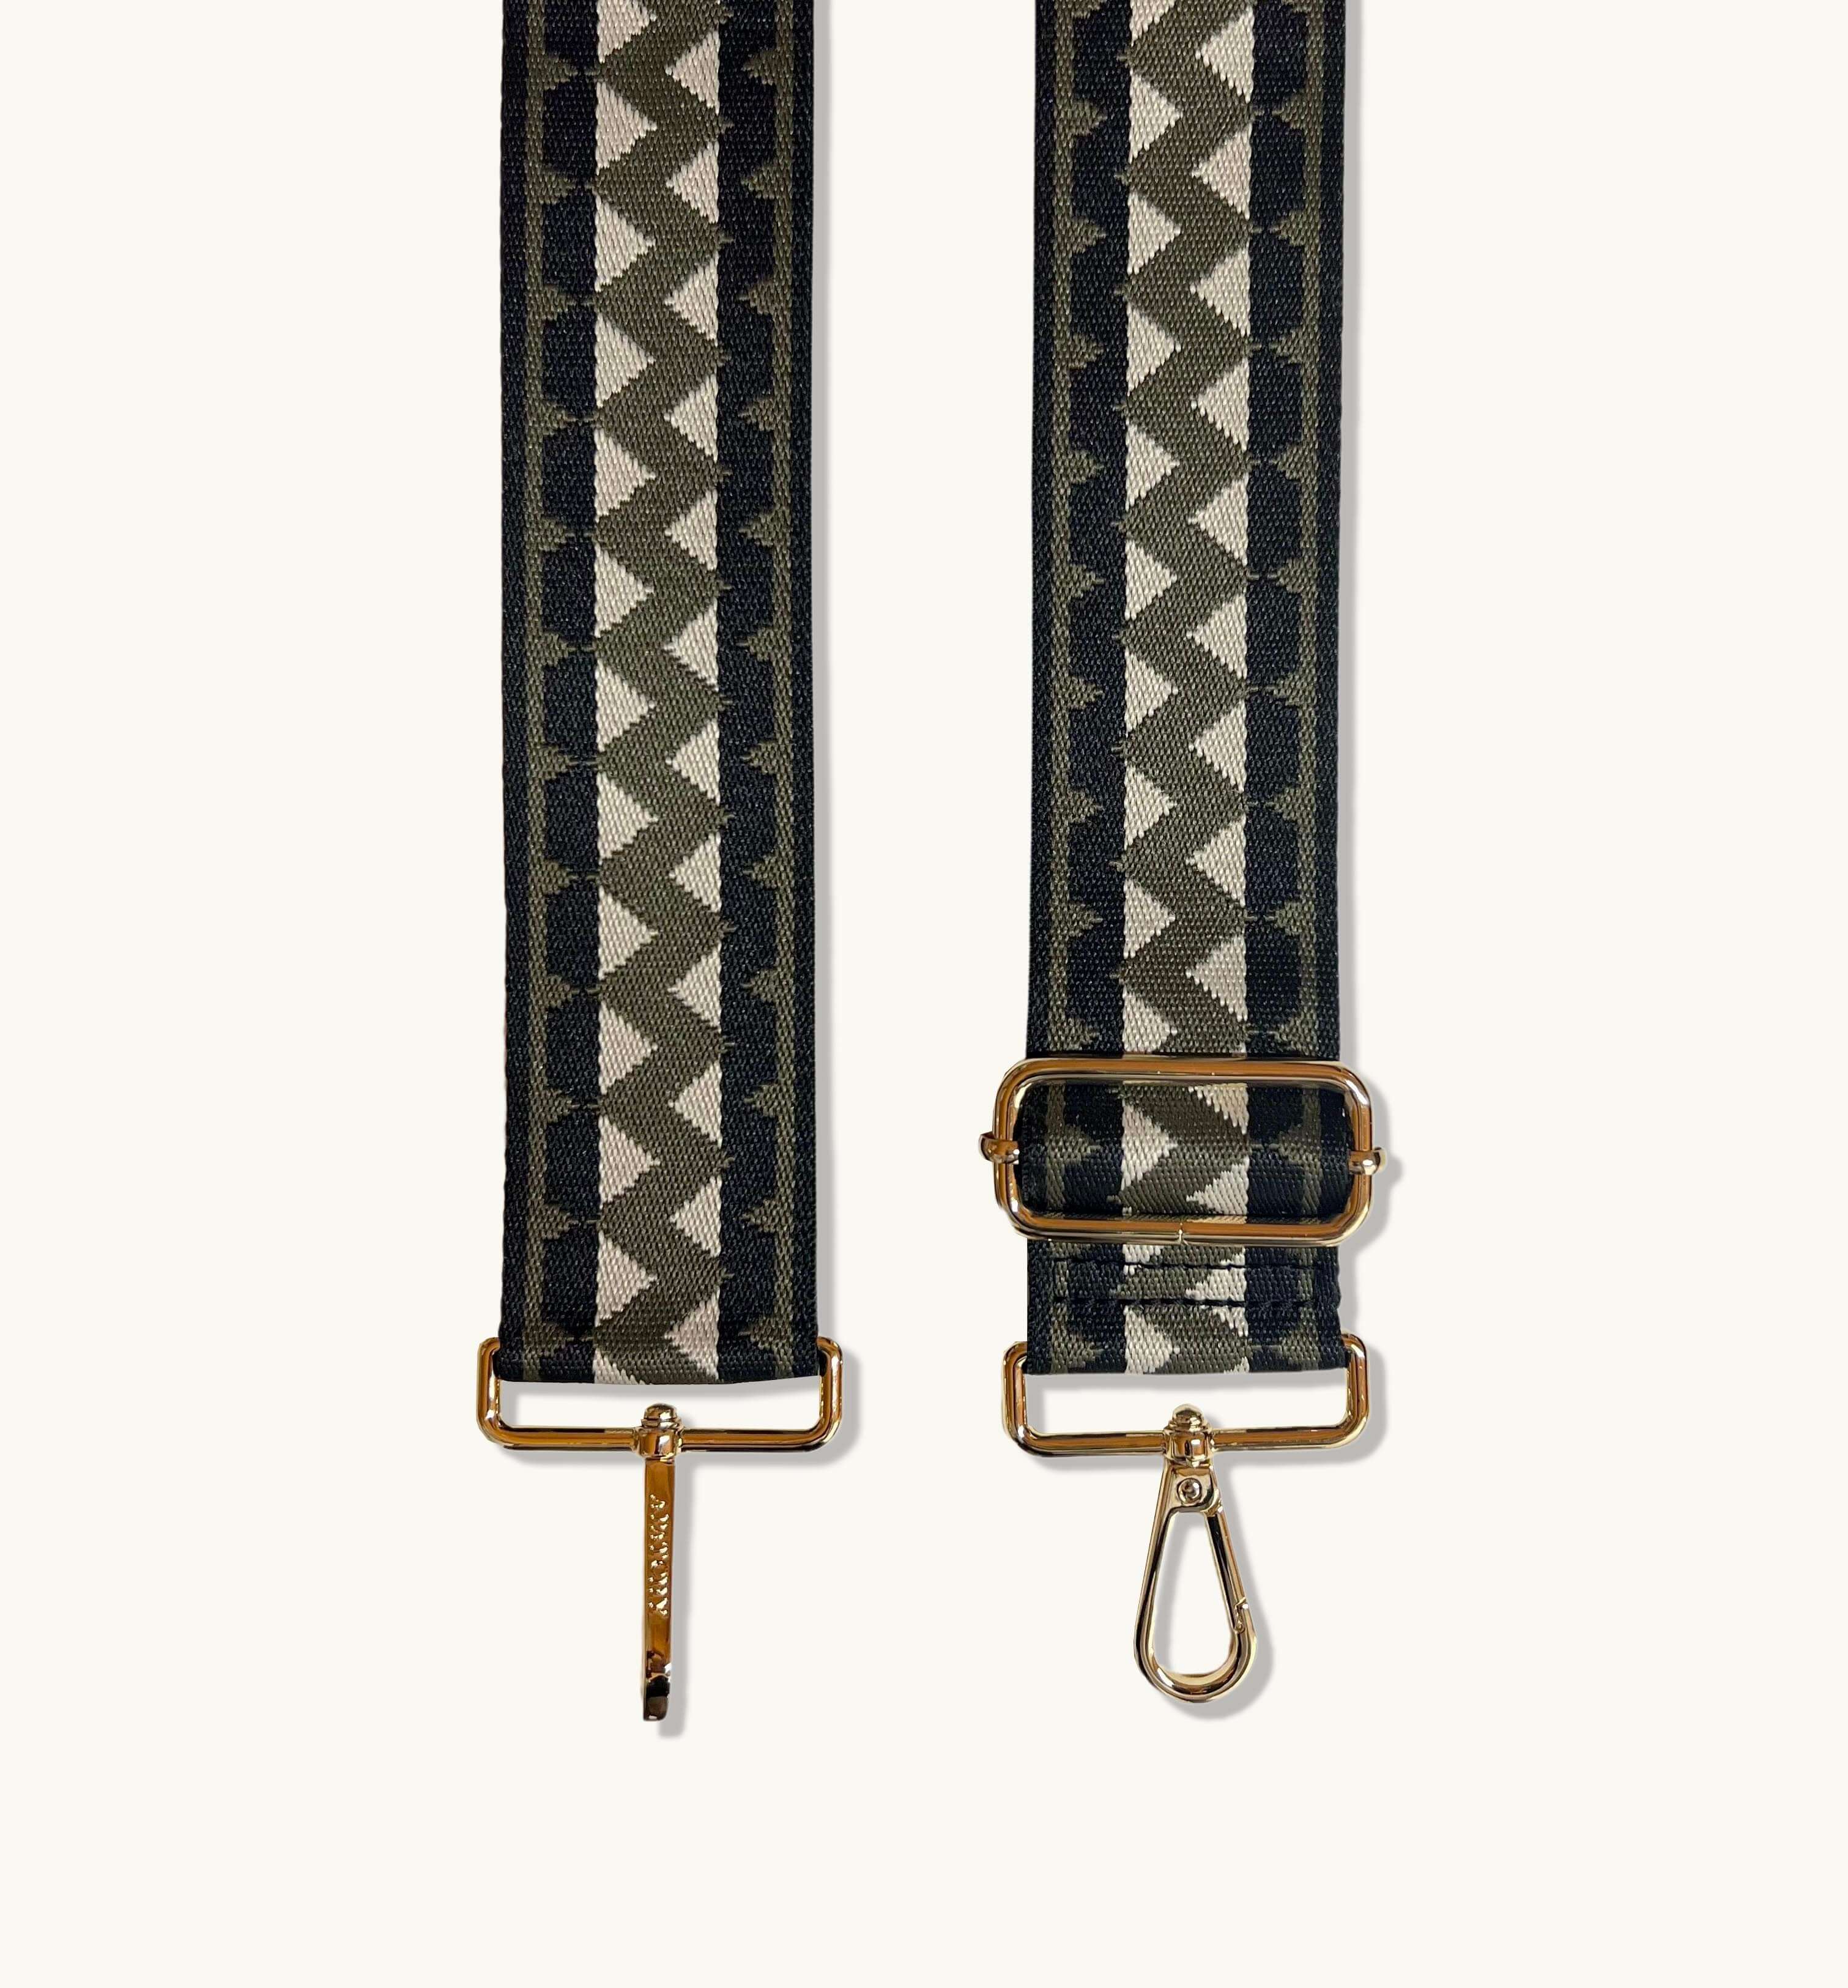 Stone Leather Crossbody Bag With Olive & Black ZigZag Strap